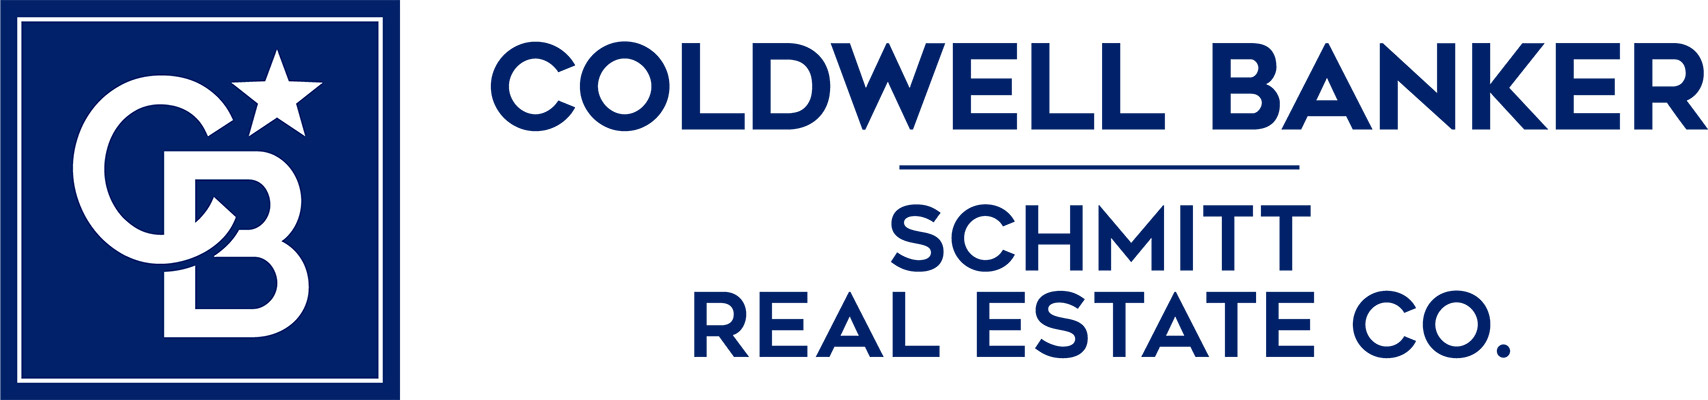 David Wiley - Coldwell Banker Logo